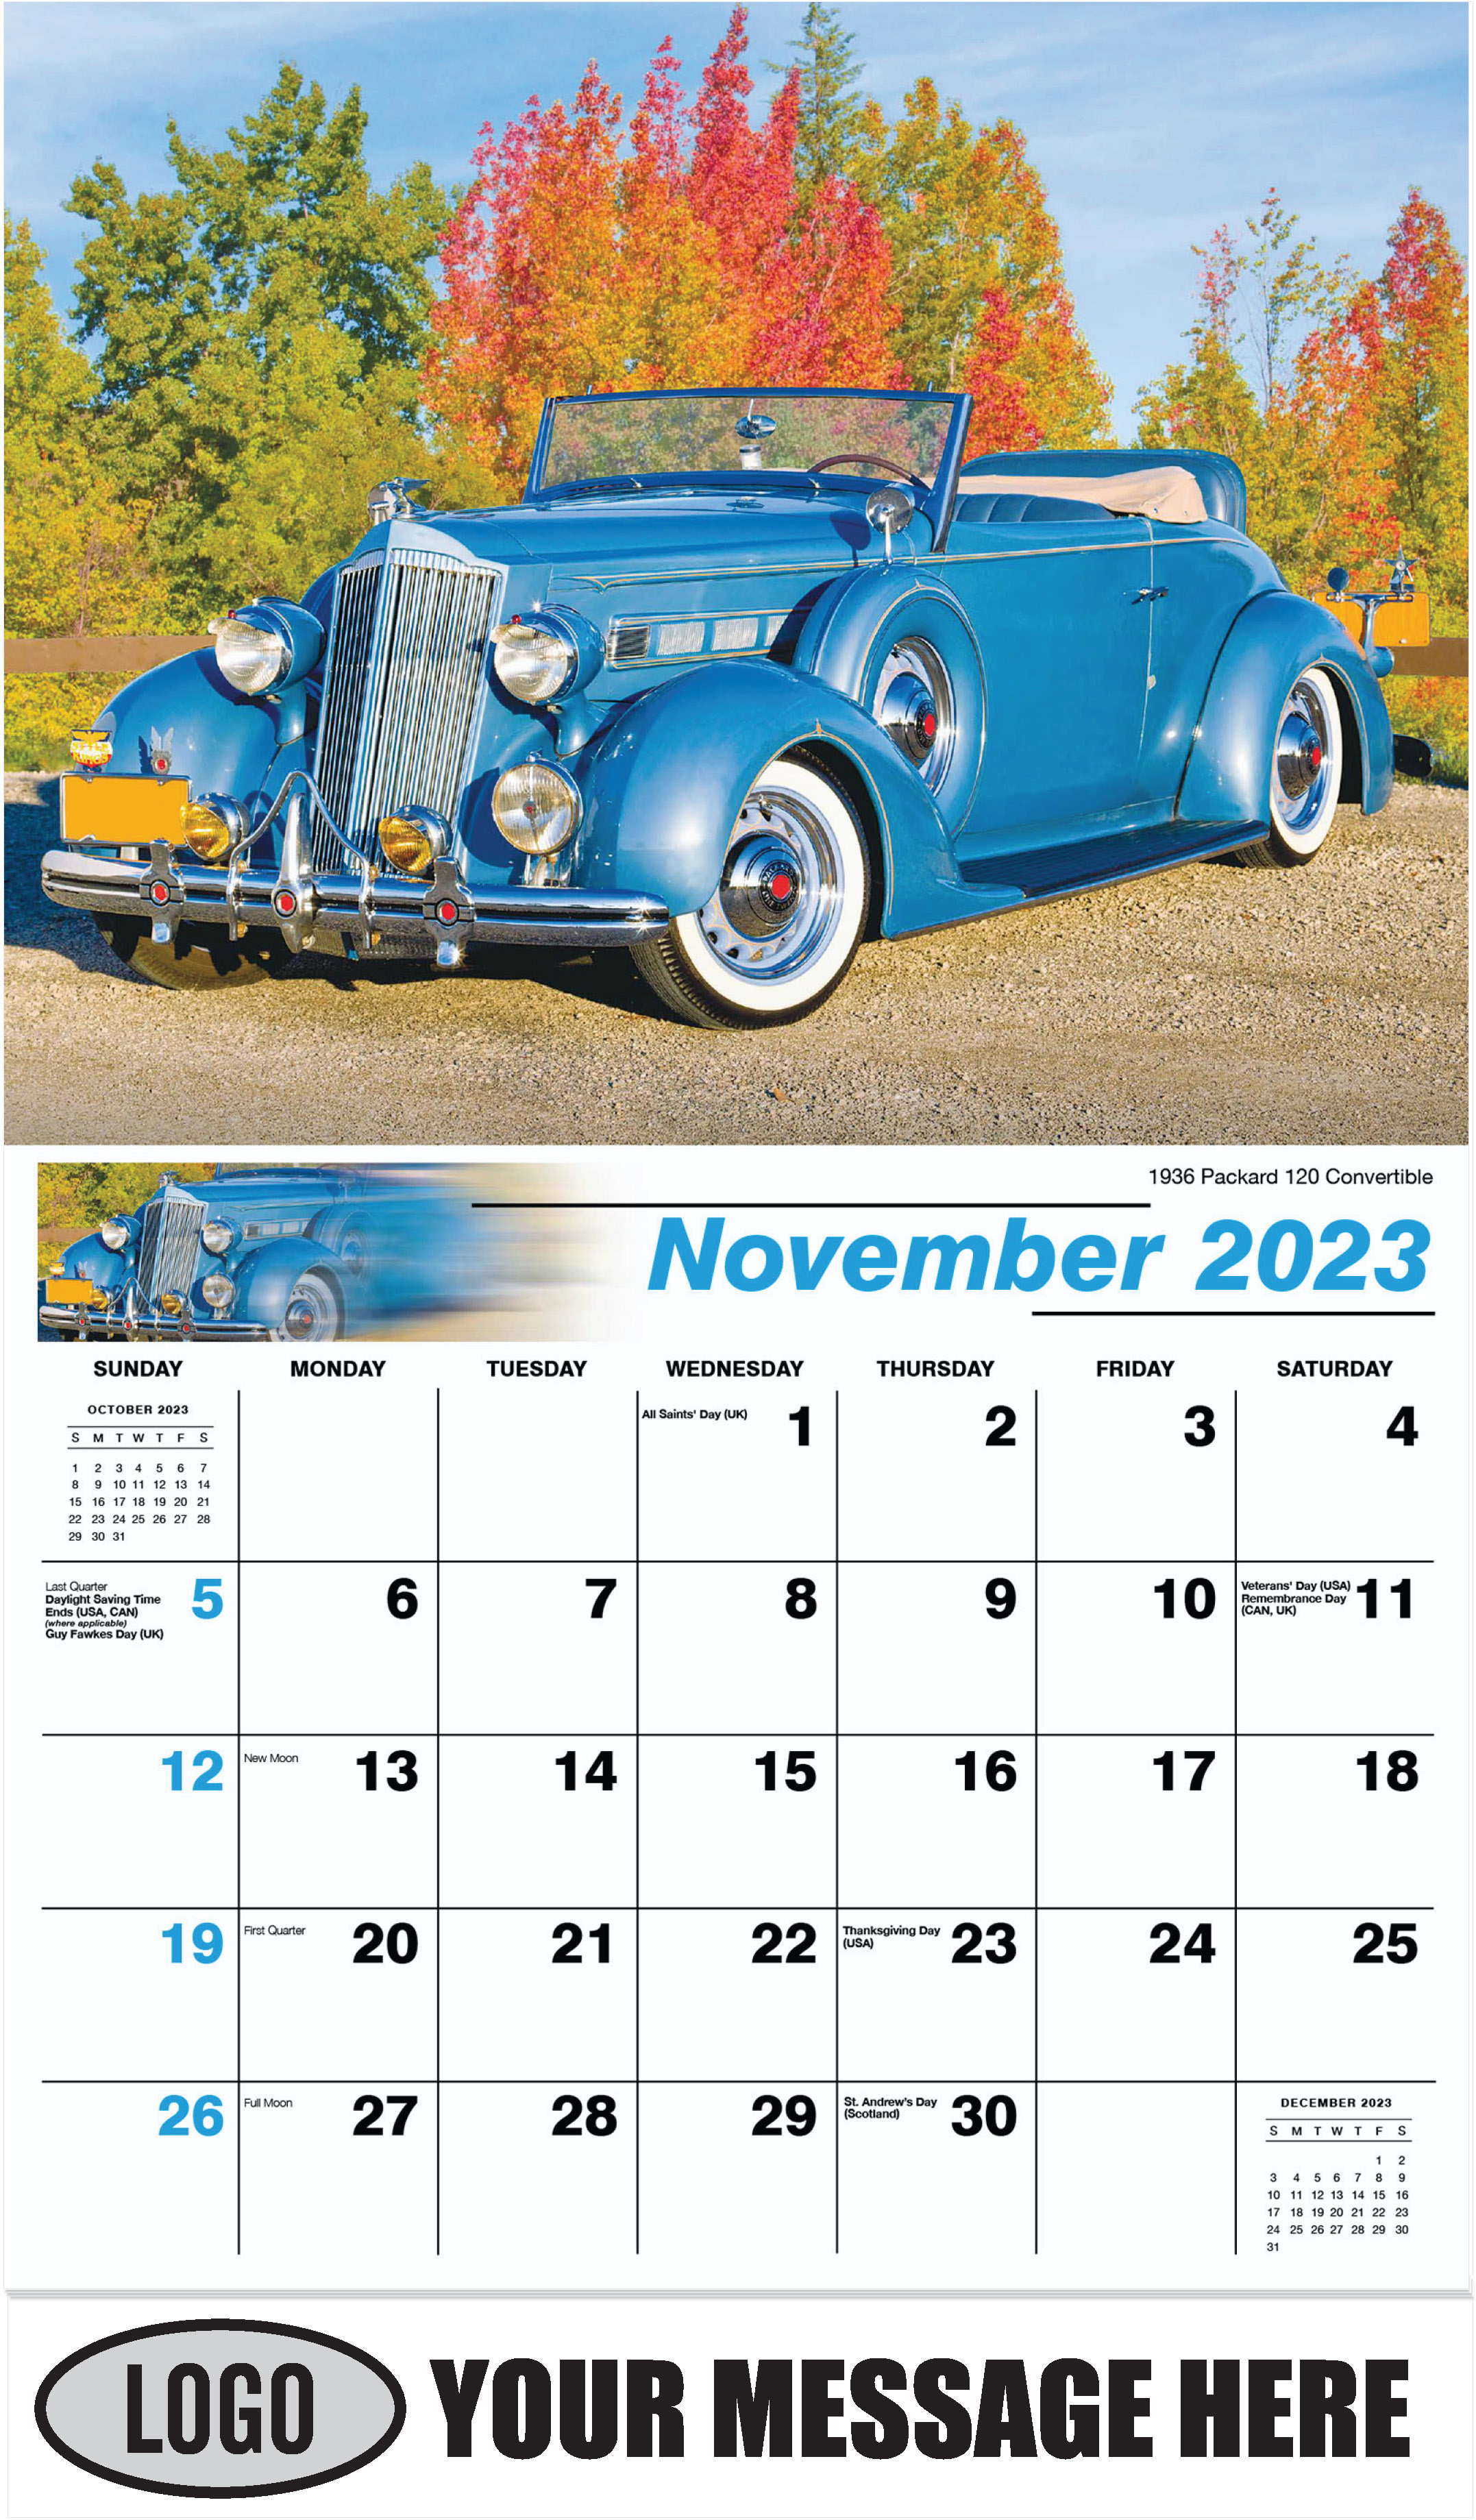 1936 Packard 120 Convertible - November - Classic Cars 2023 Promotional Calendar